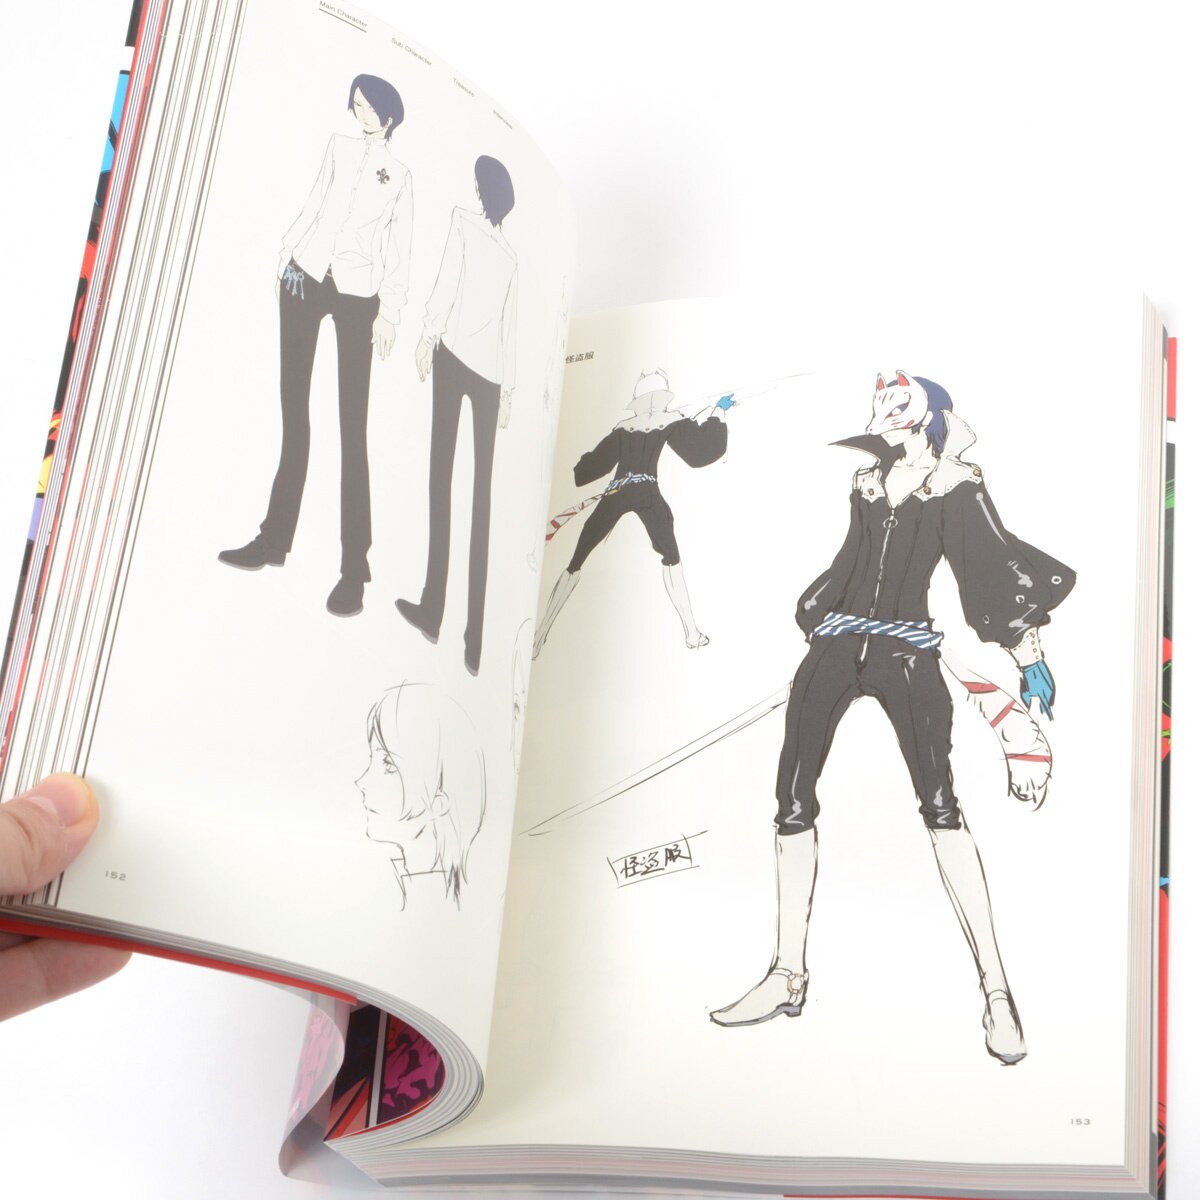 Persona 5 Royal Art Book by Shigenori Soejima